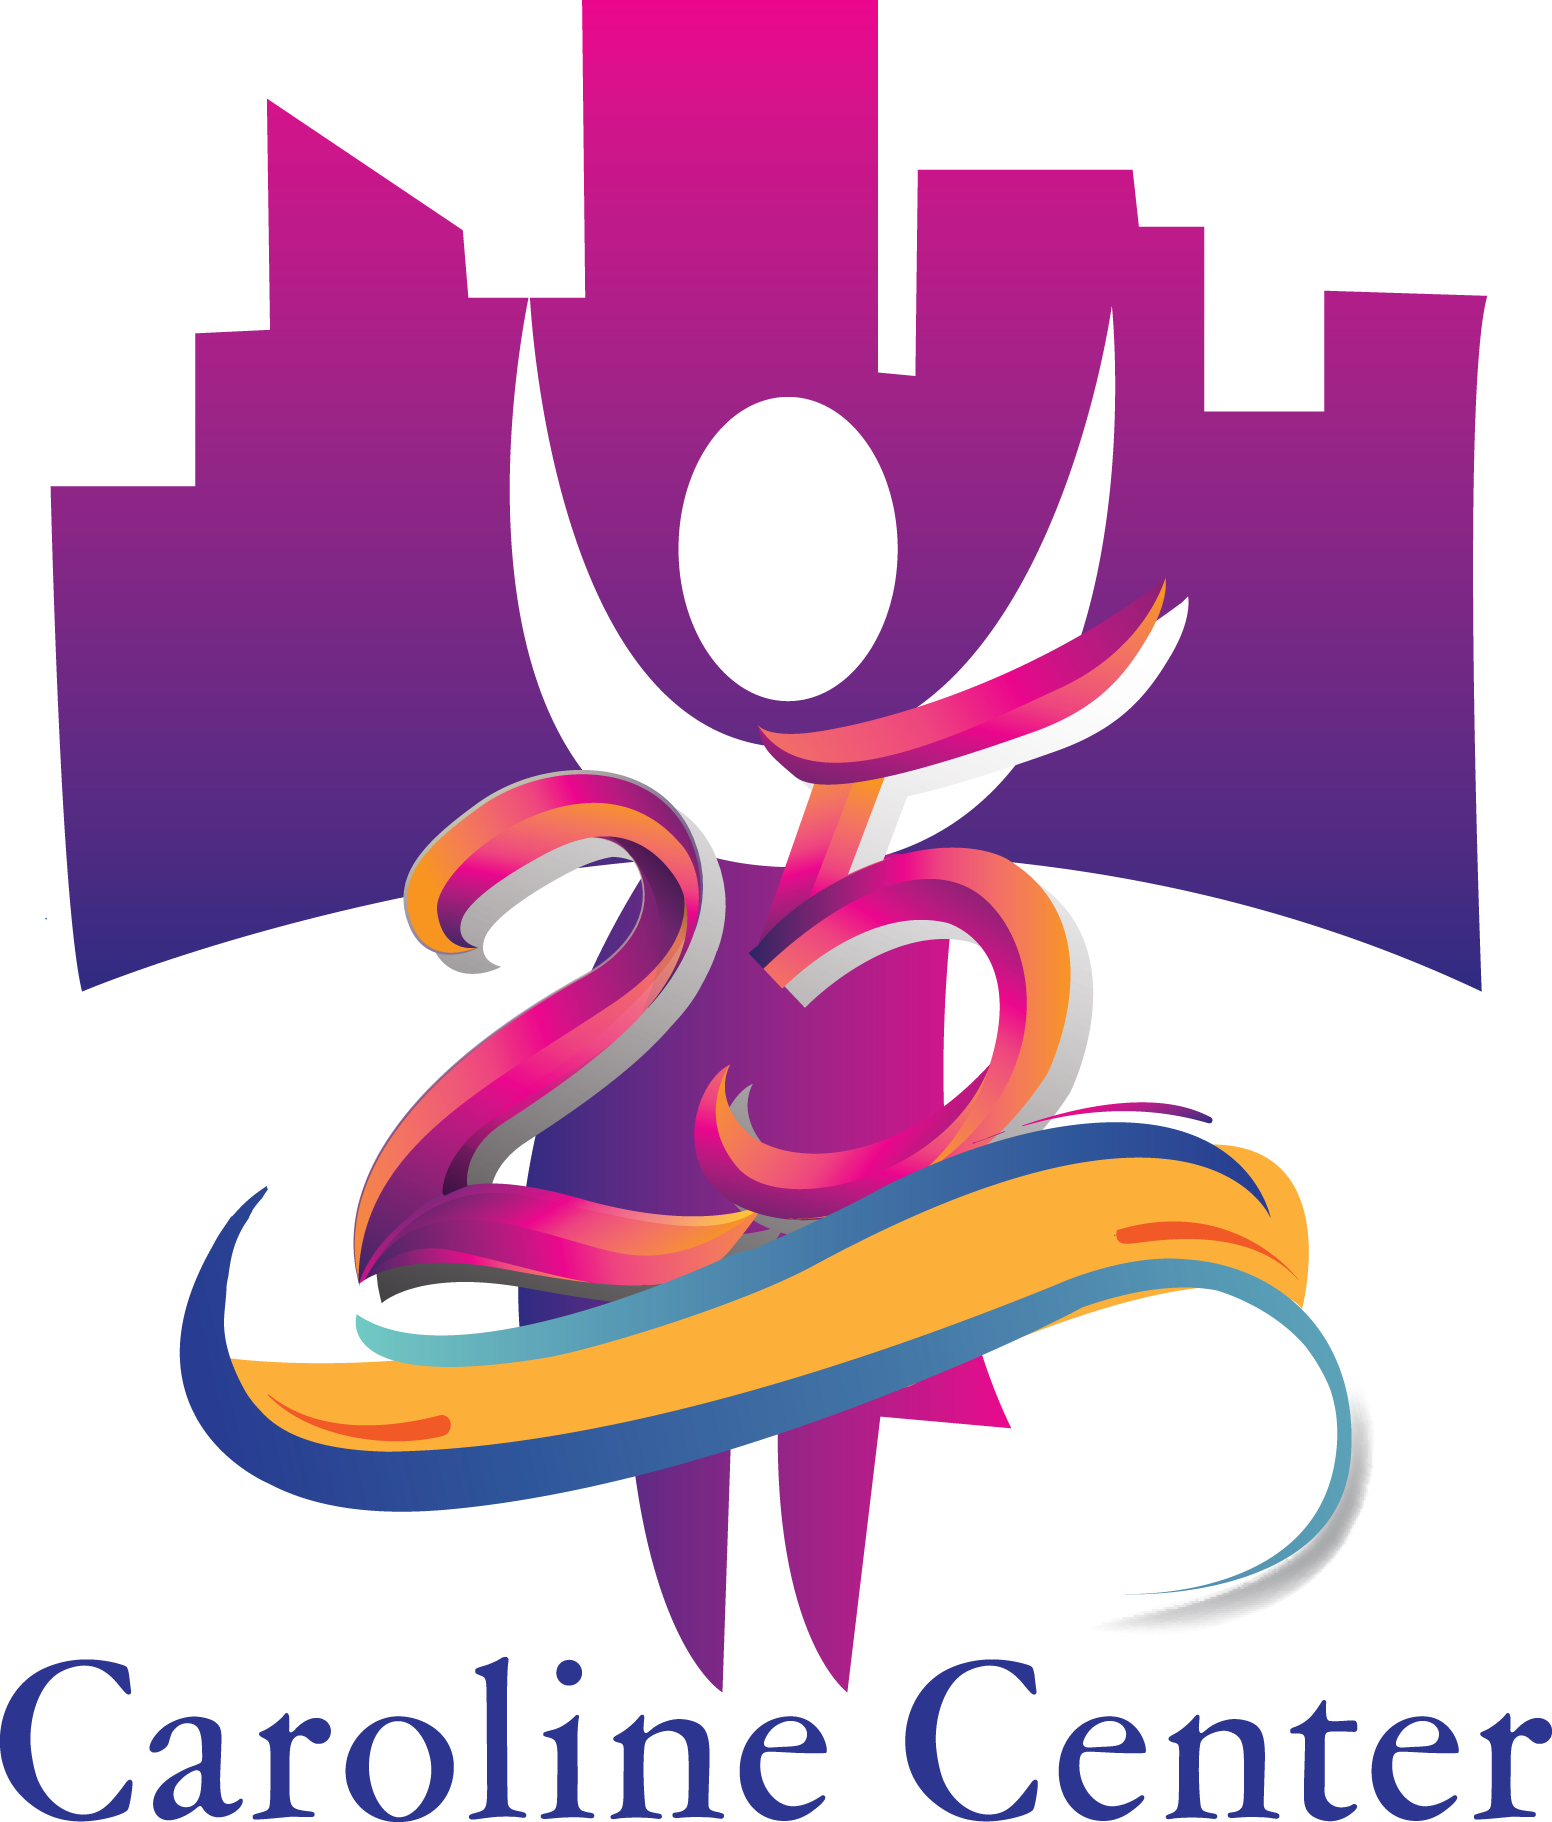 Caroline Center 25 Years Logo